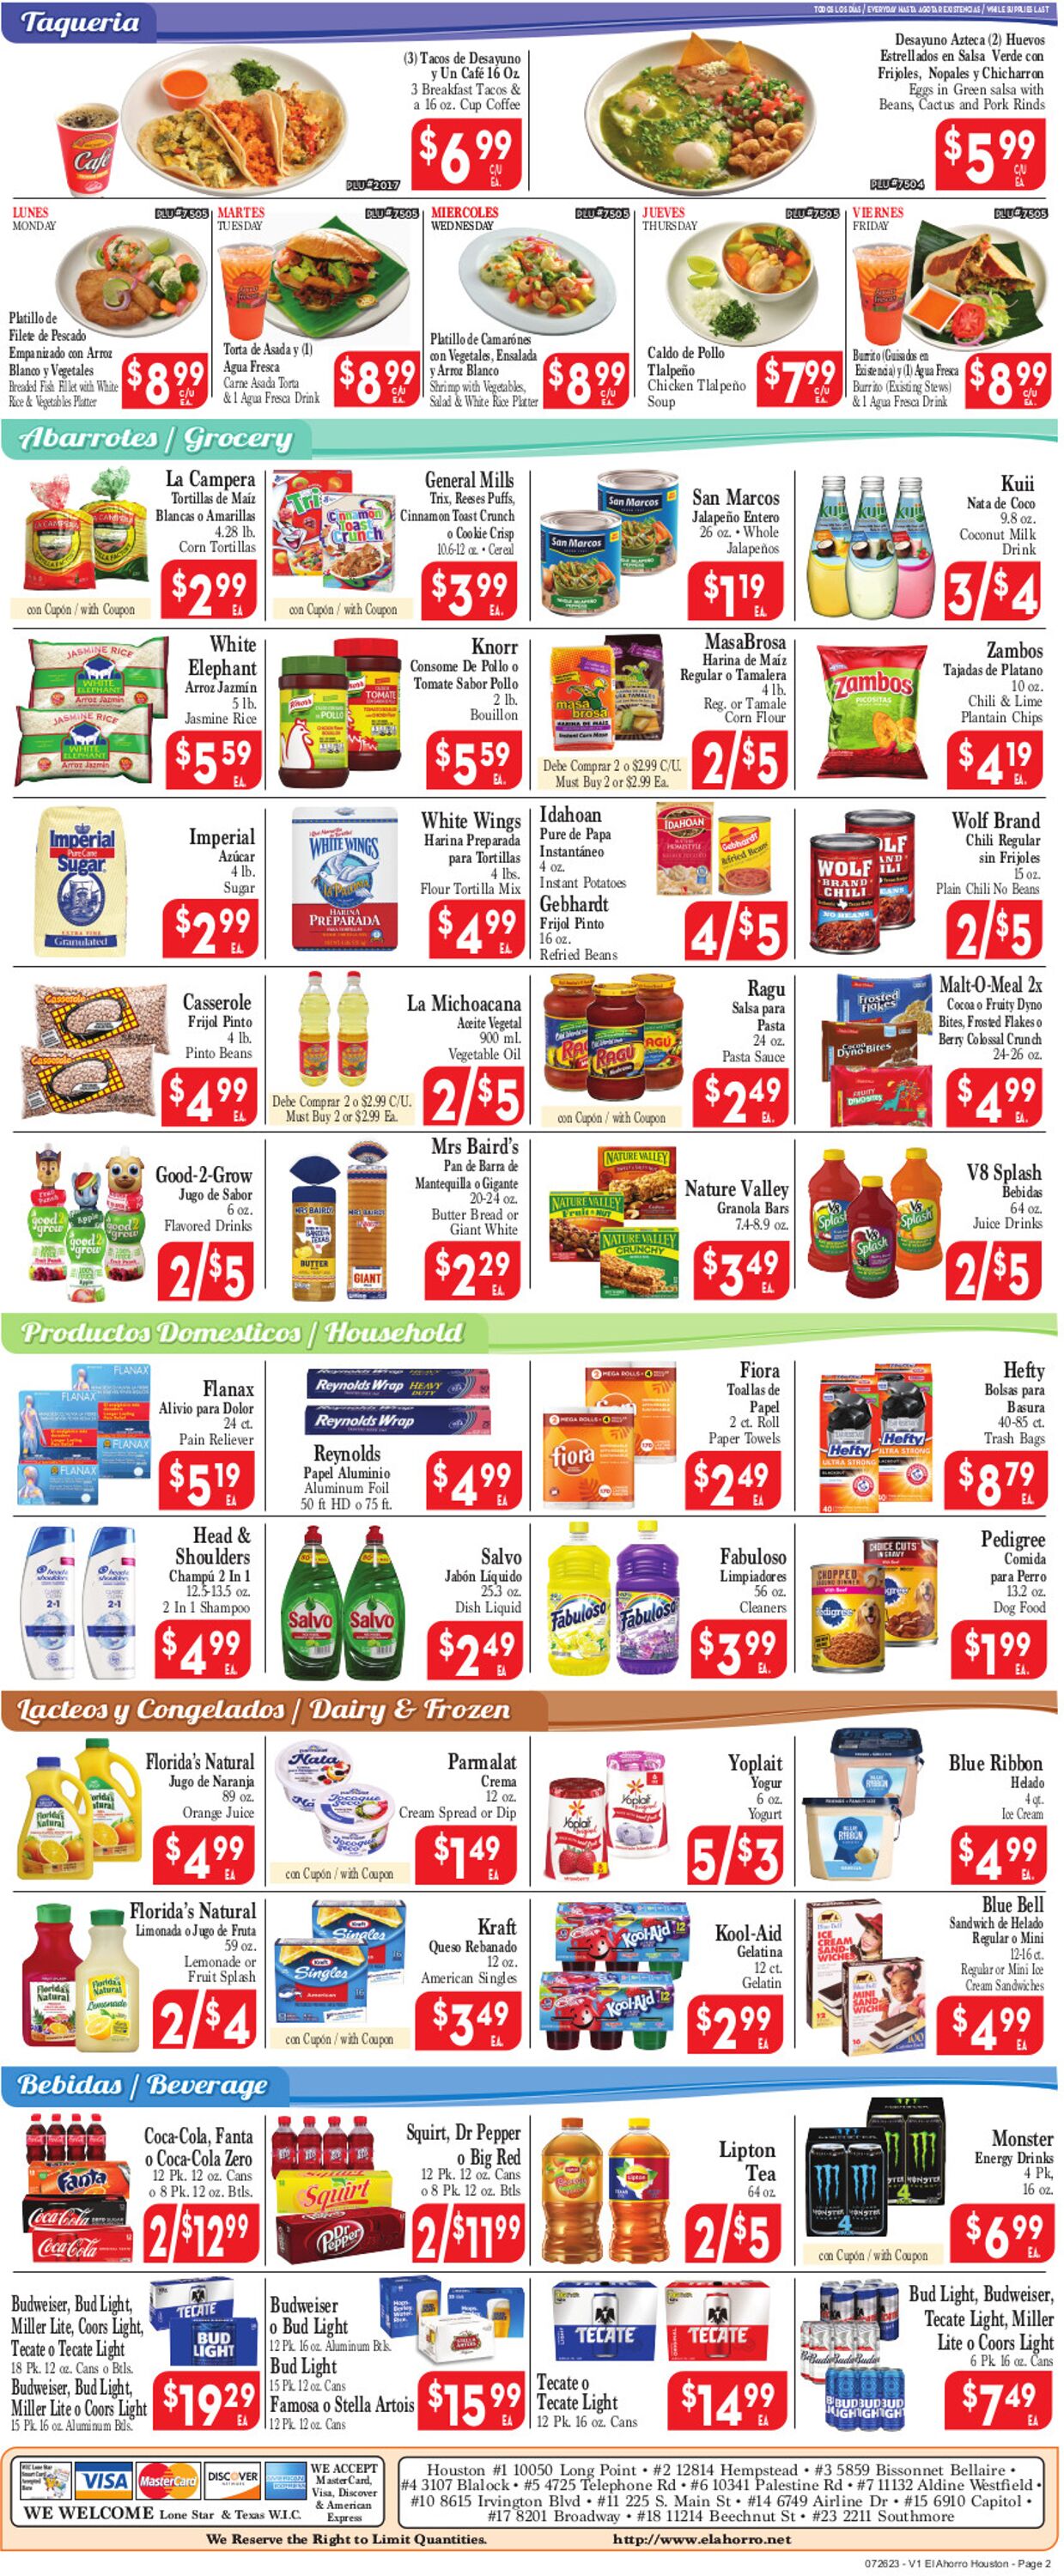 Catalogue El Ahorro Supermarket from 07/26/2023